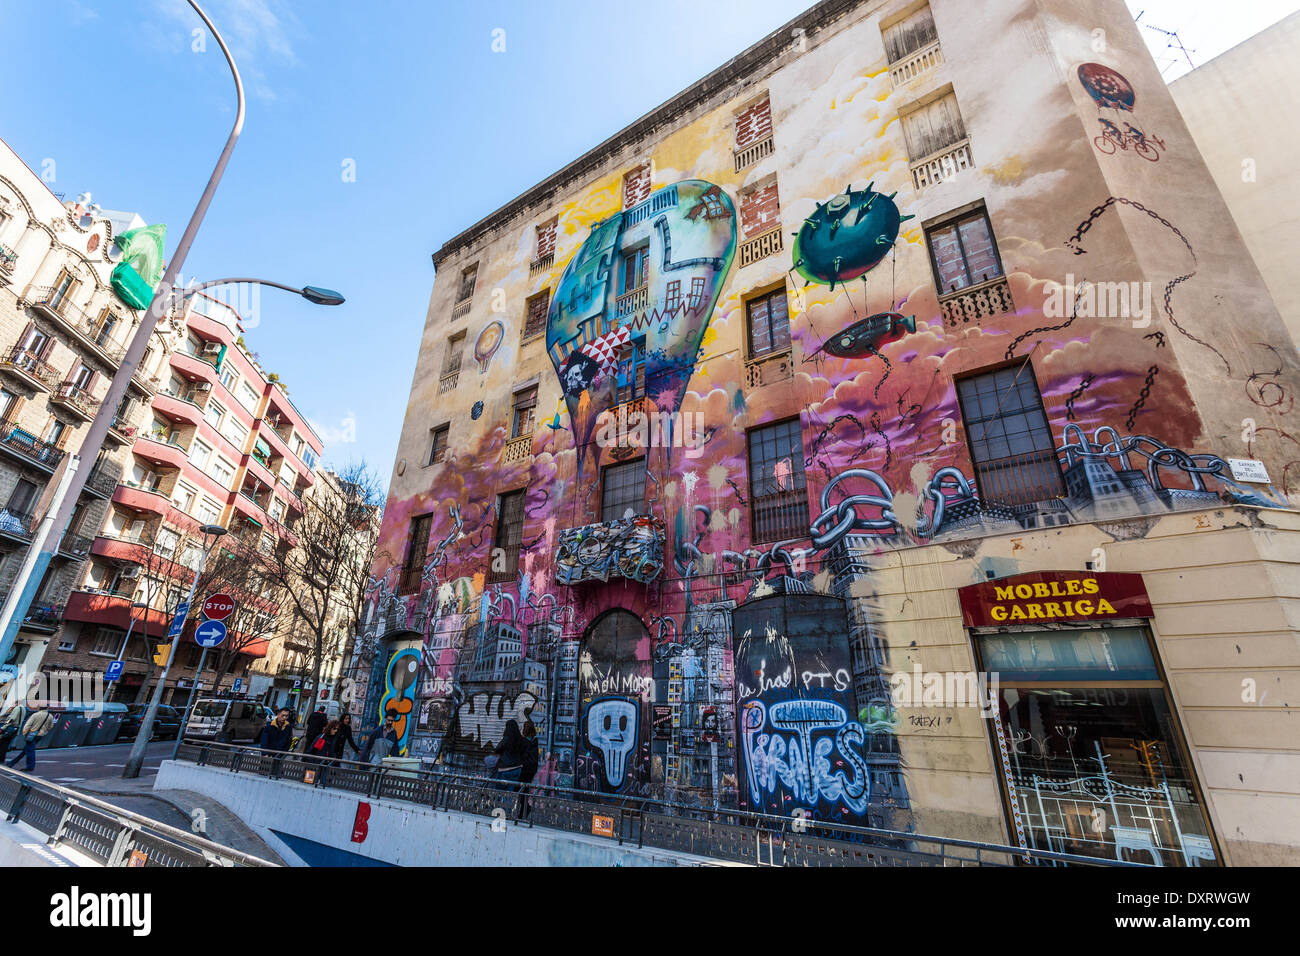 Large graffiti on old building, Barcelona, Spain. Stock Photo